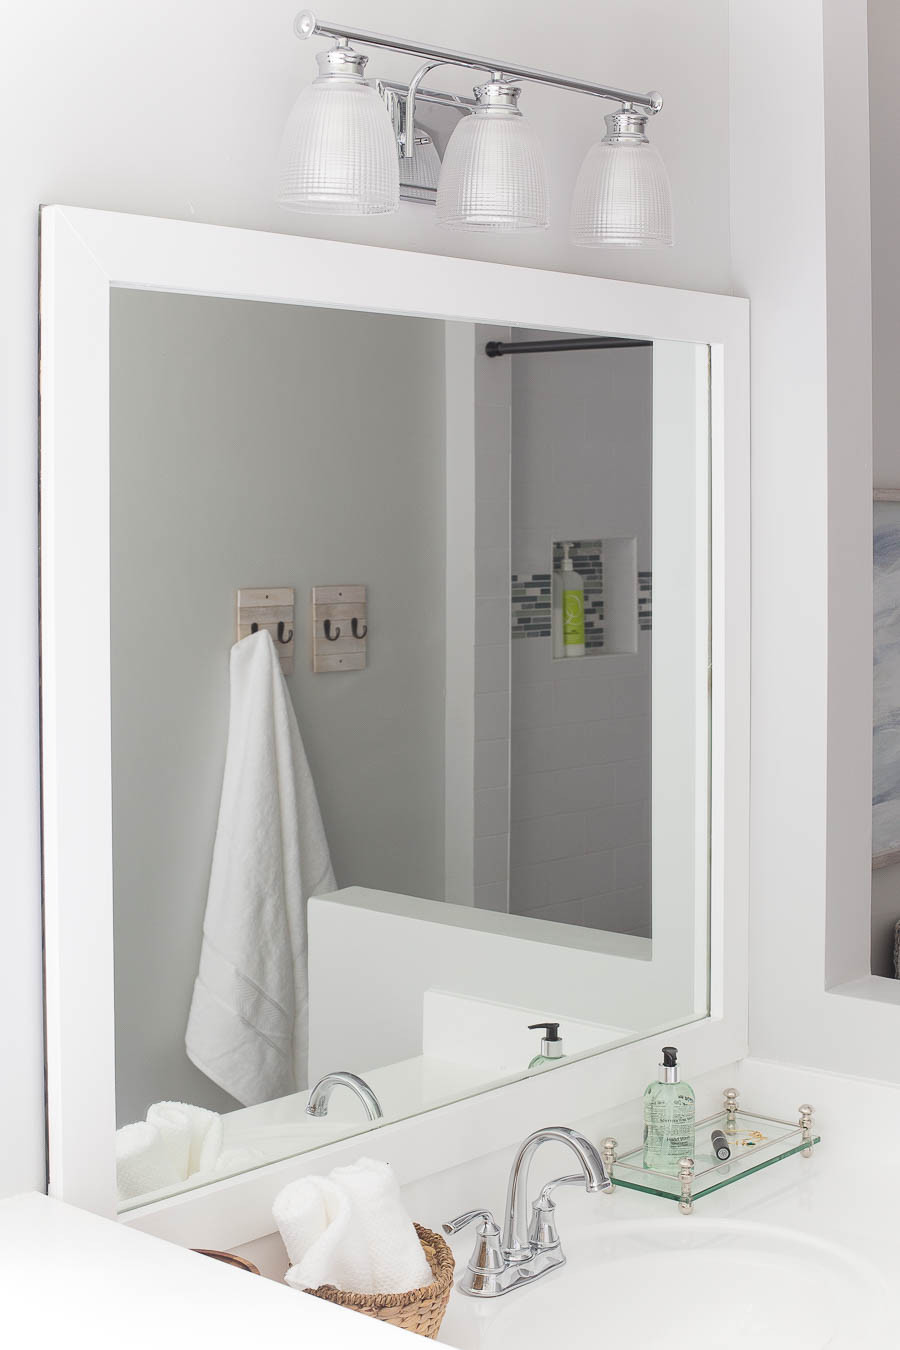 Framed Bathroom Mirrors
 How to Frame a Bathroom Mirror Easy DIY project